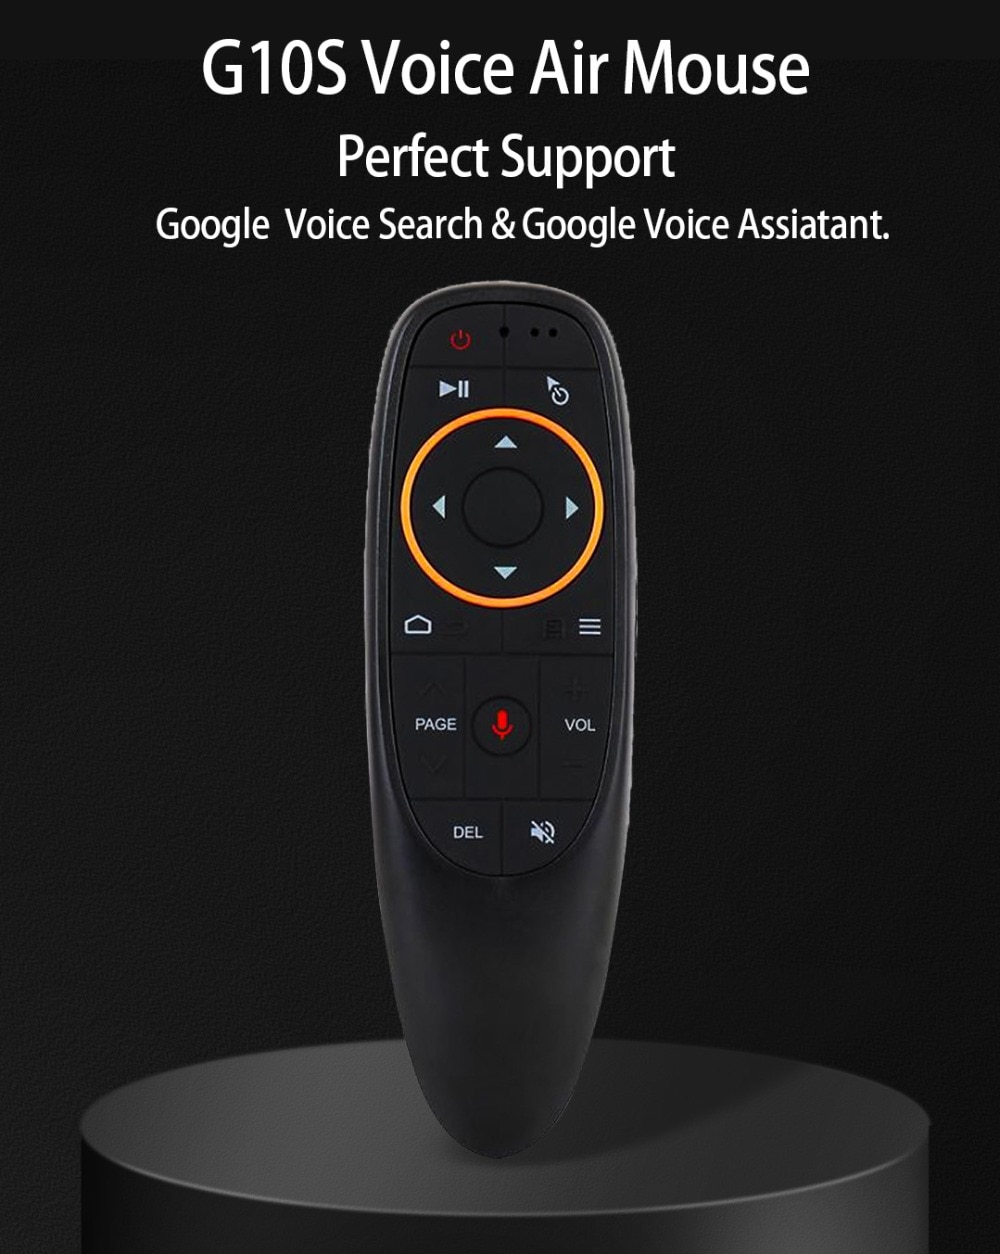 Topsion-2020-Smart-Tv-Box-Android-10-2GB-16GB-4K-H265-Media-Player-3D-24G-Wifi-Tv-Box-Wifi-Smart-Tv--1005001859440615